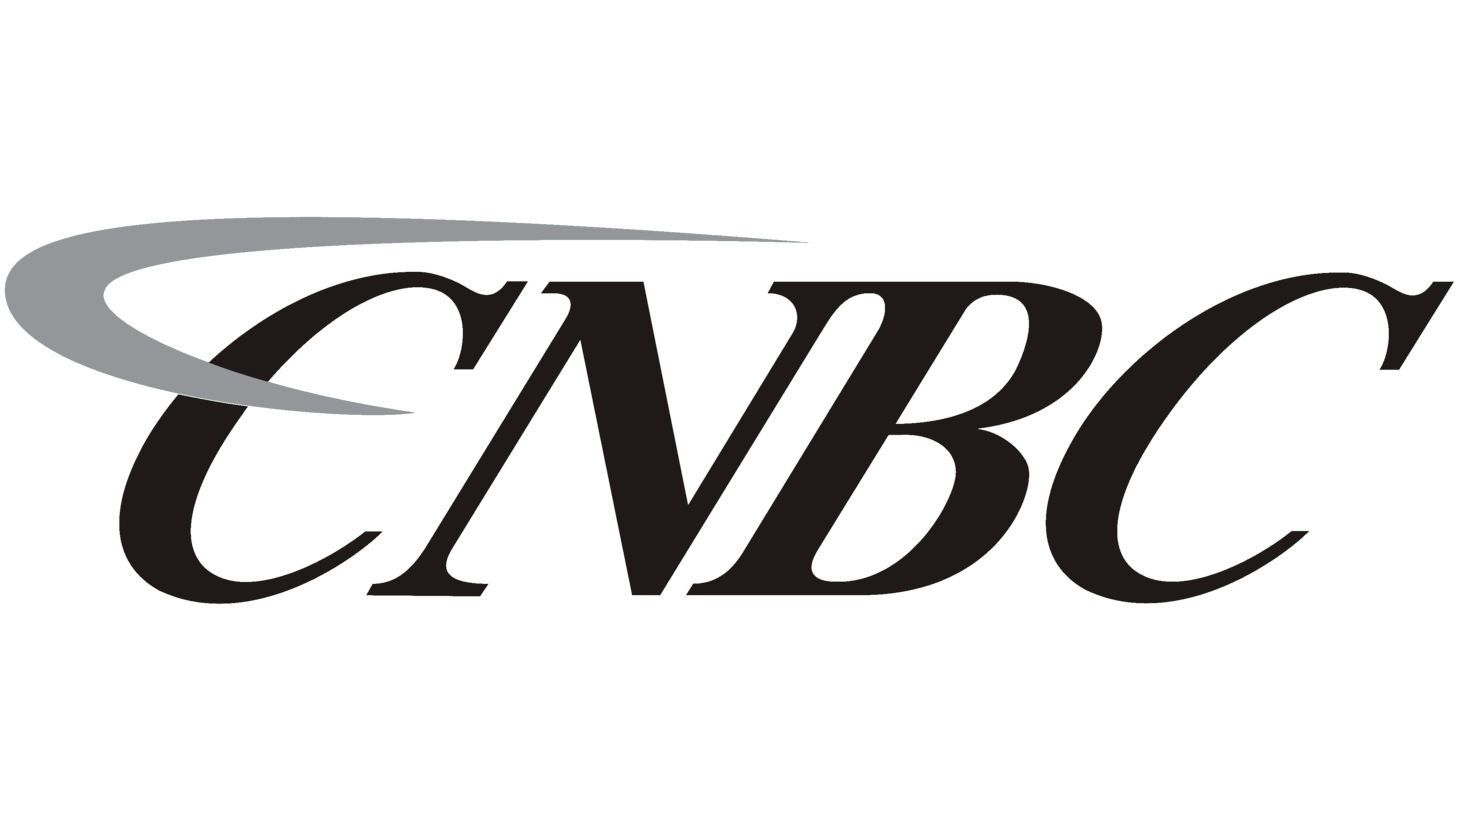 Cnbc sign 1992